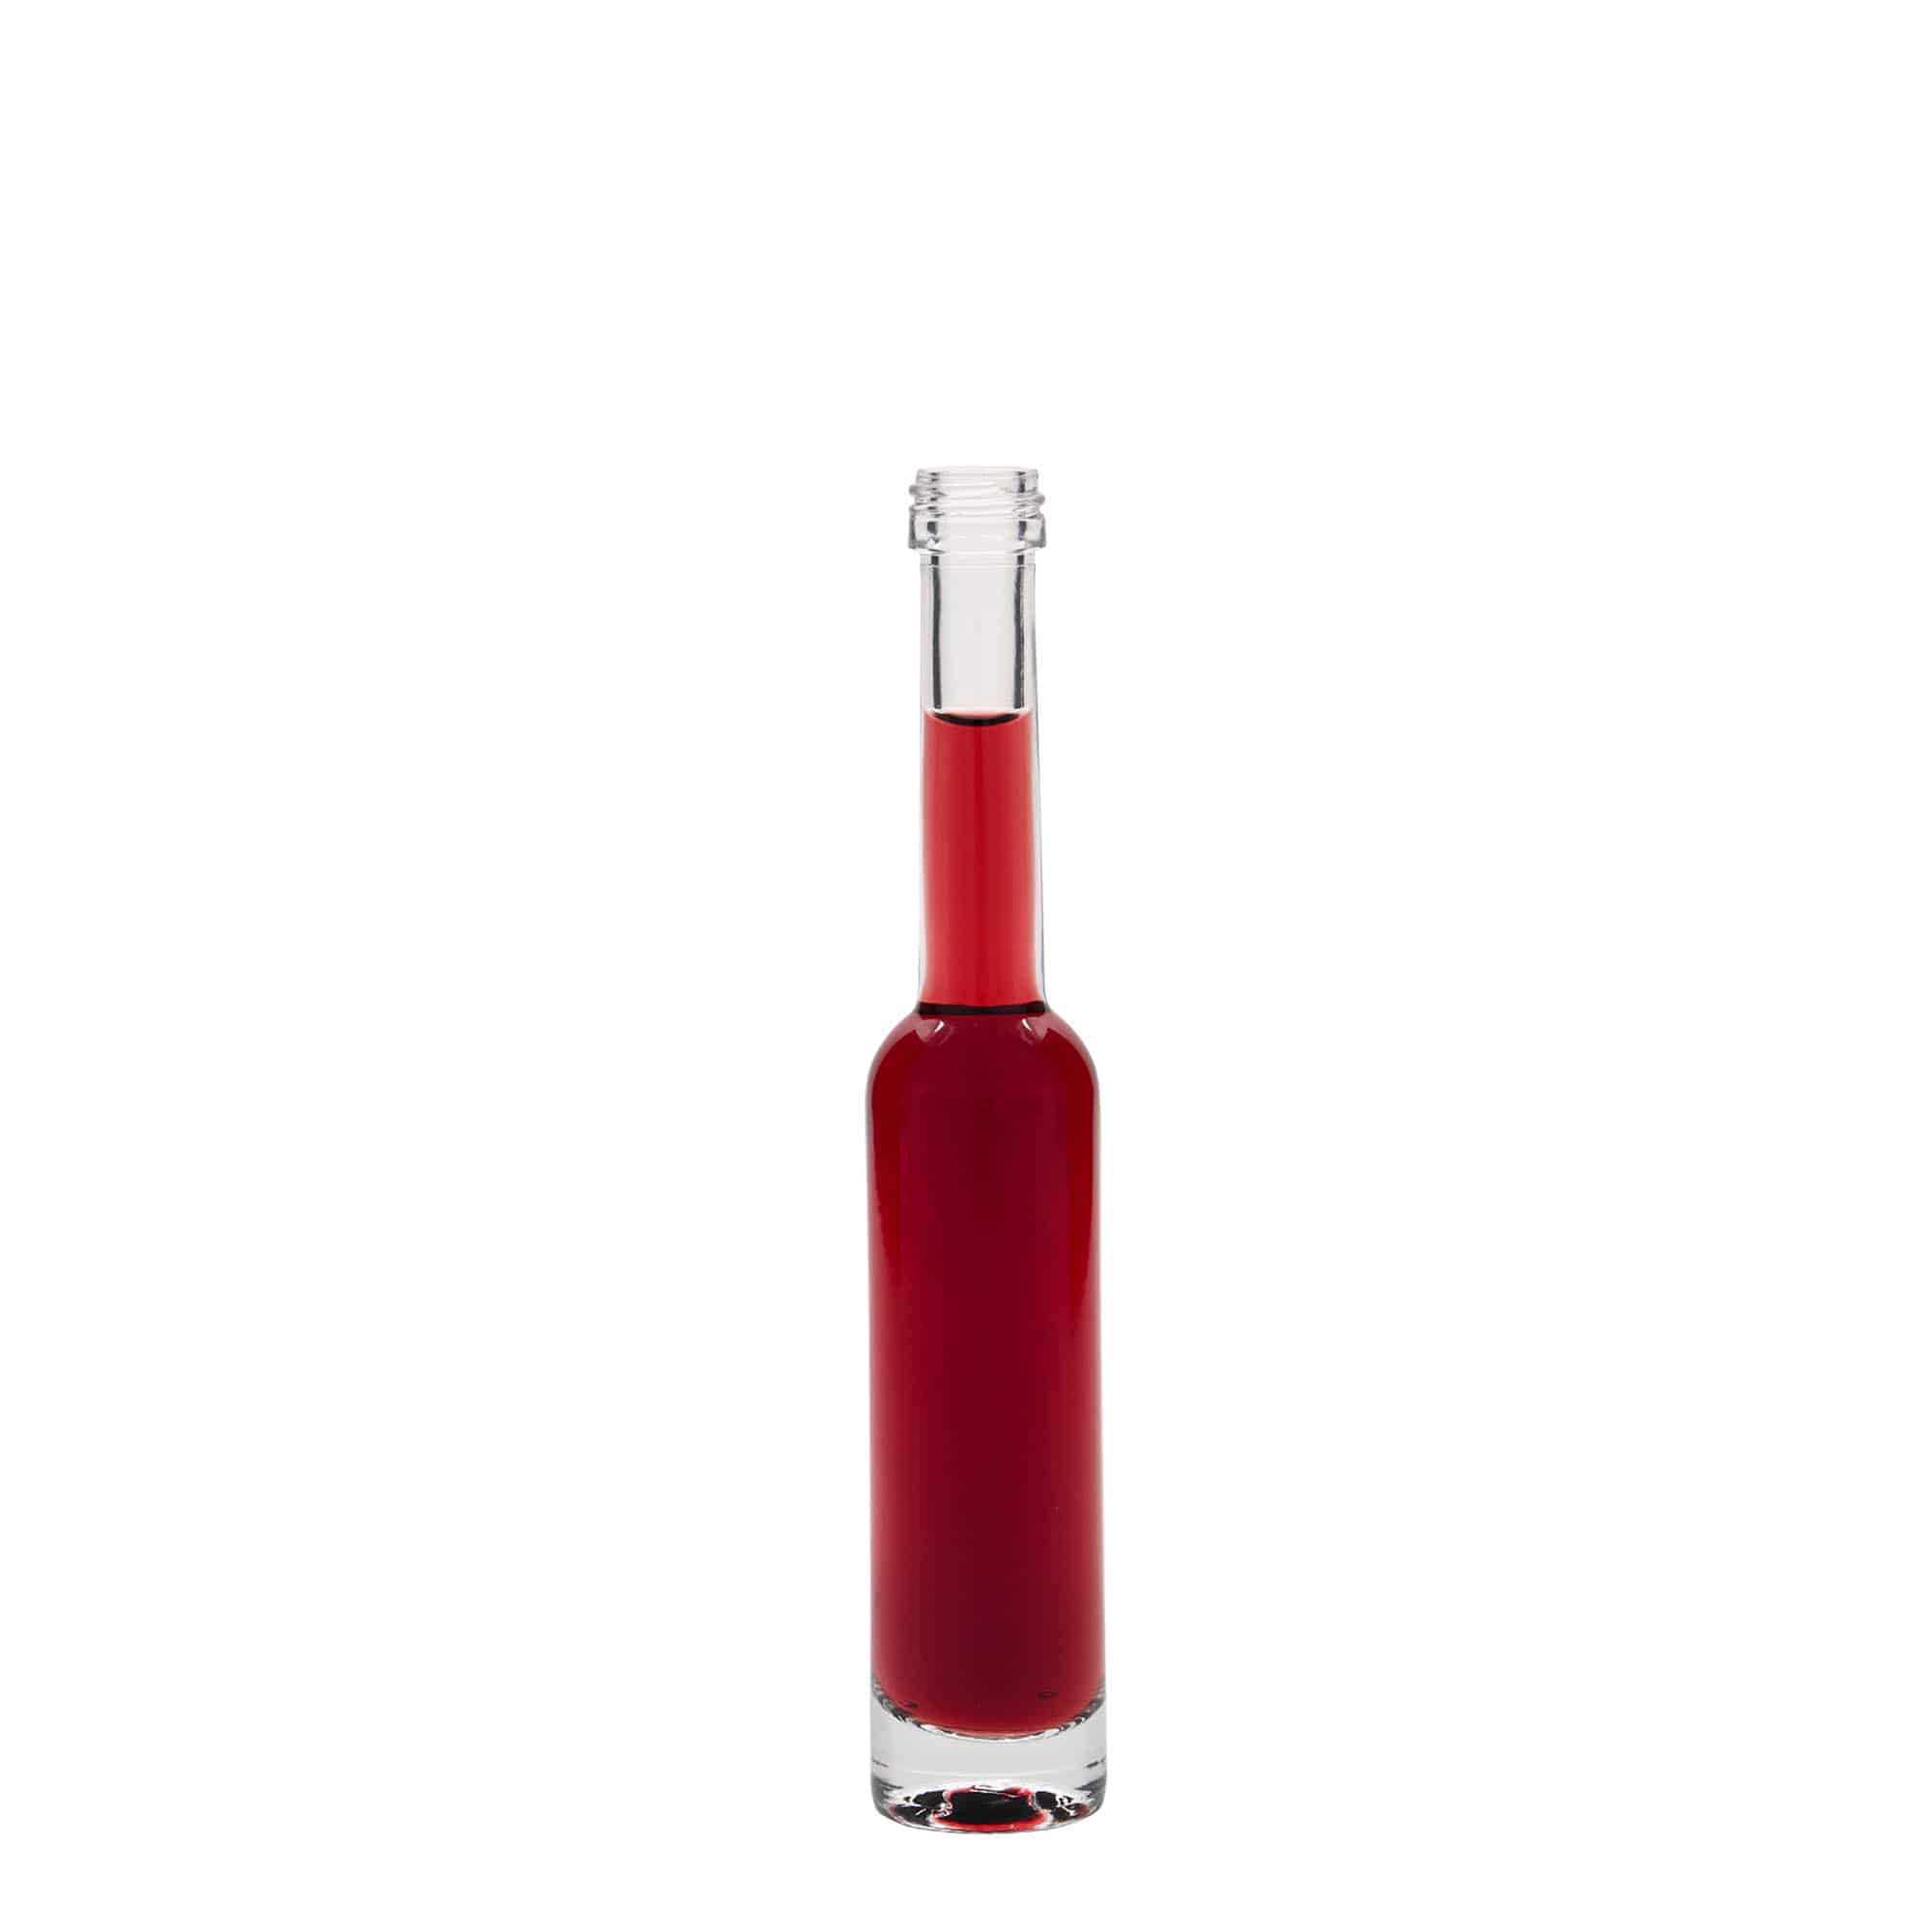 40 ml glass bottle 'Platina', closure: PP 18